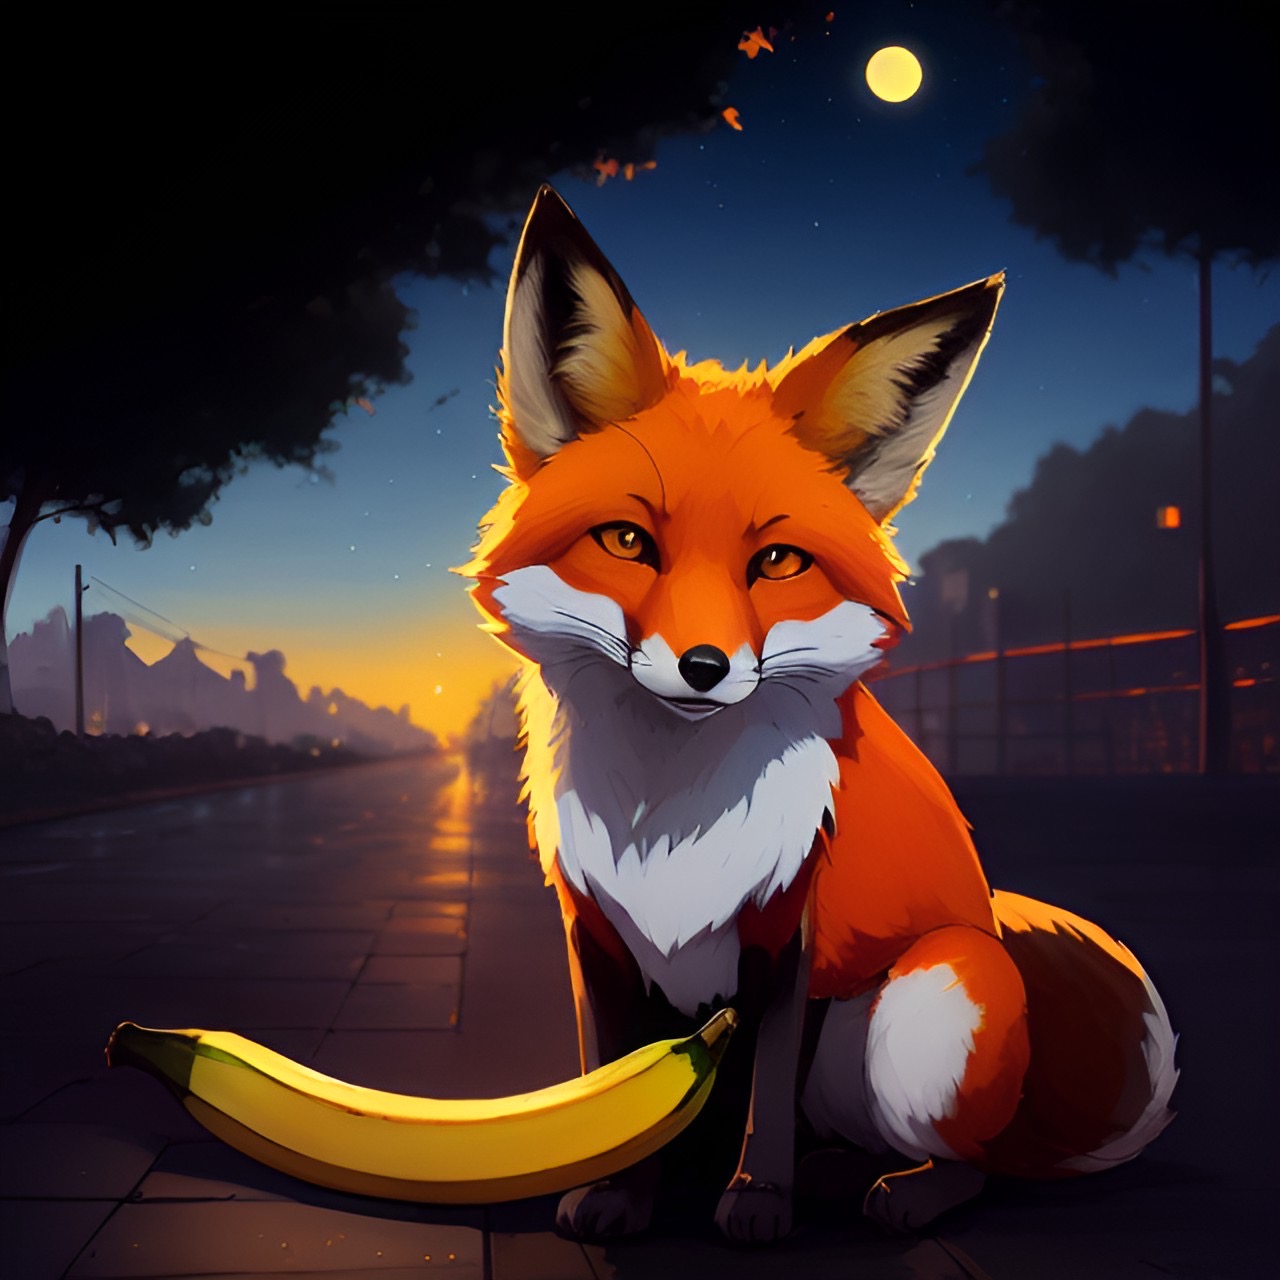 A fox at night with a banana